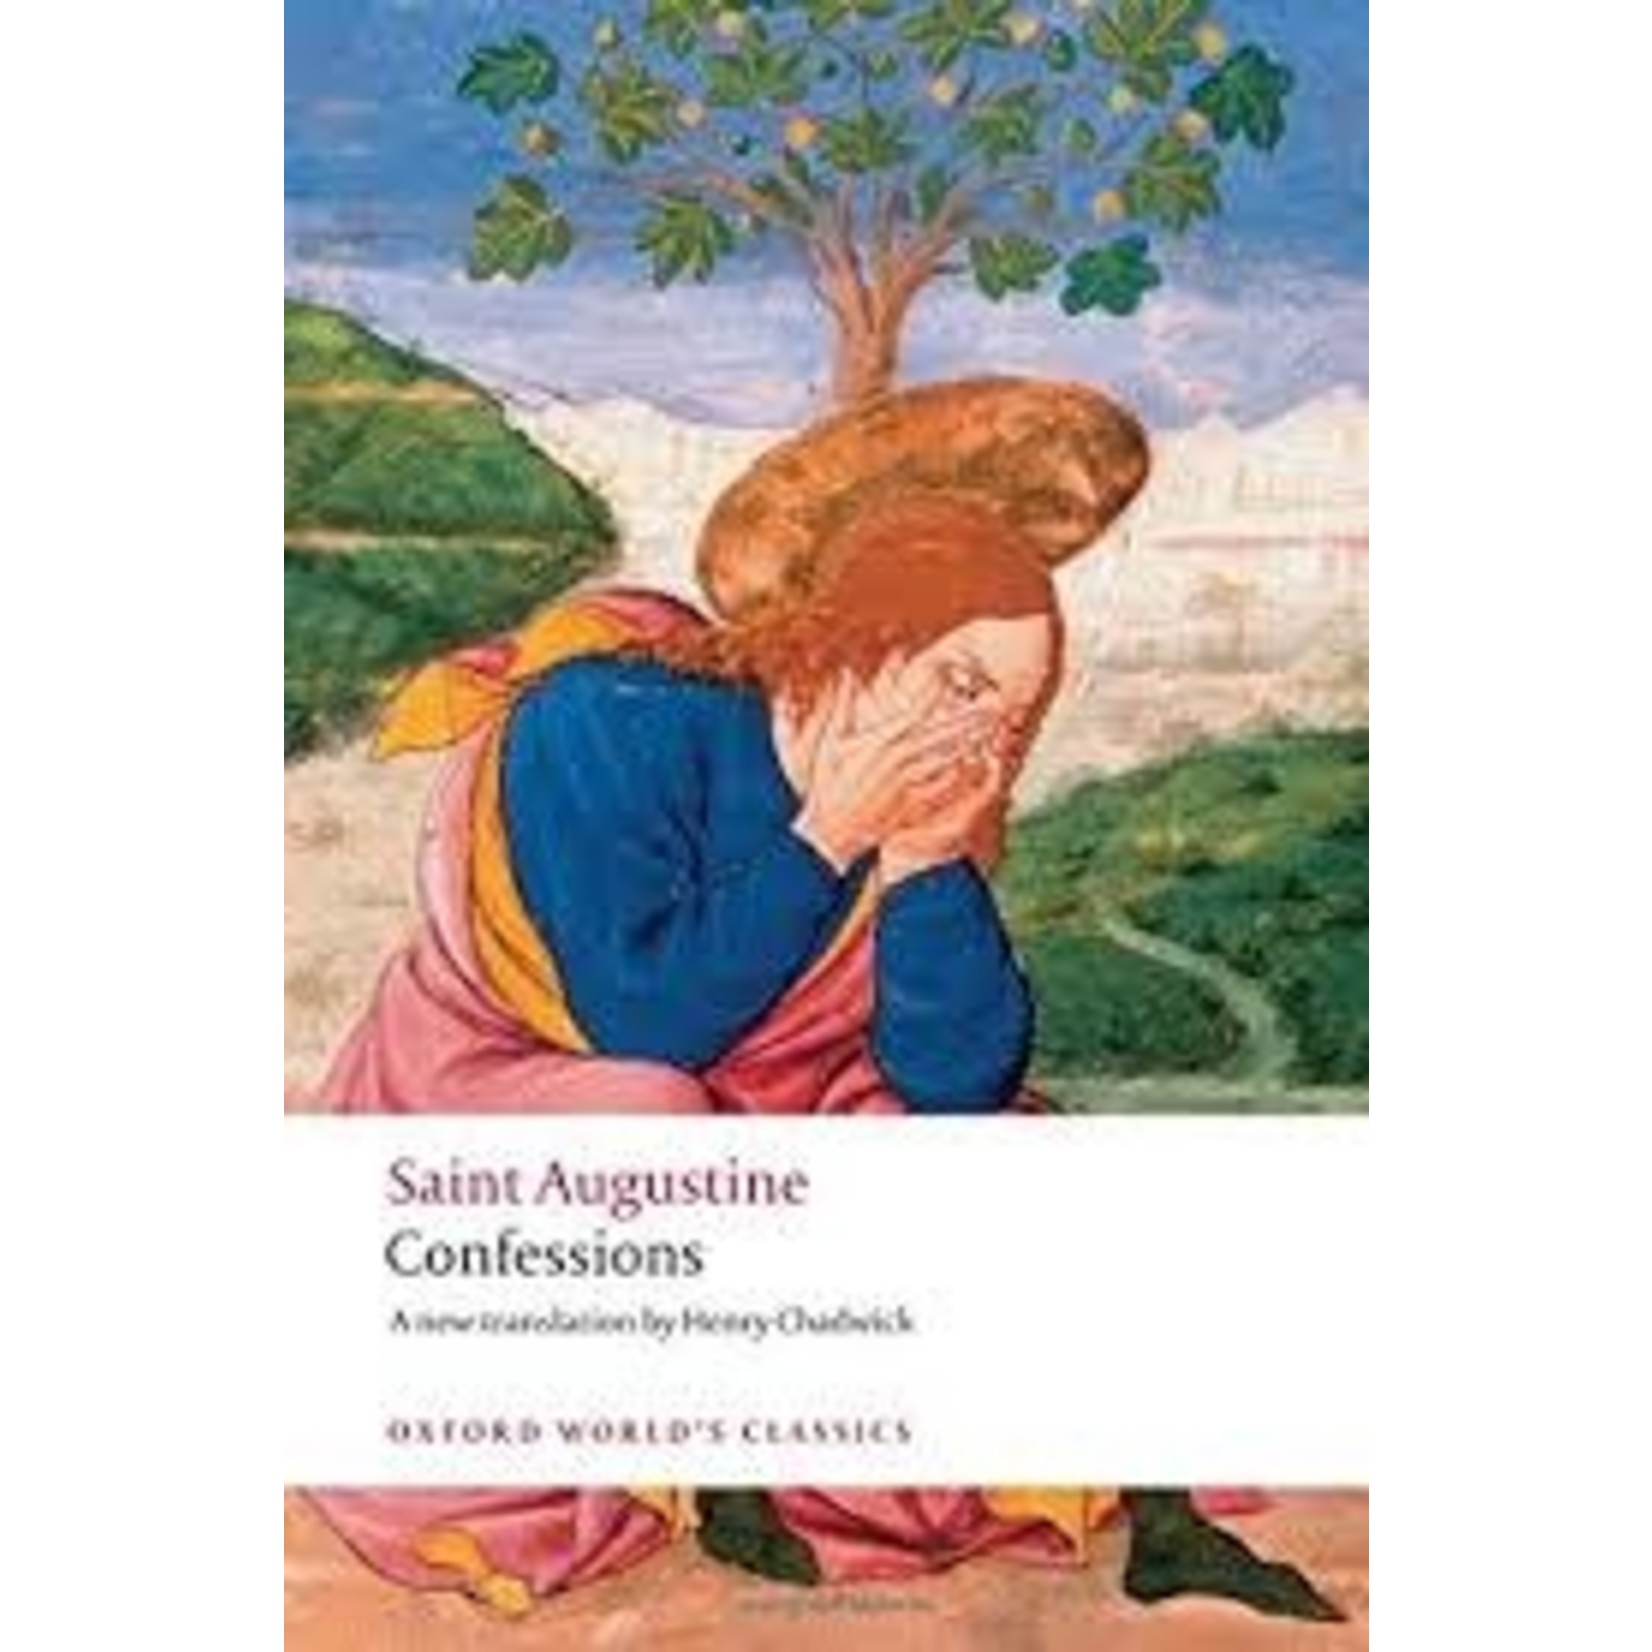 Confessions (Oxford)